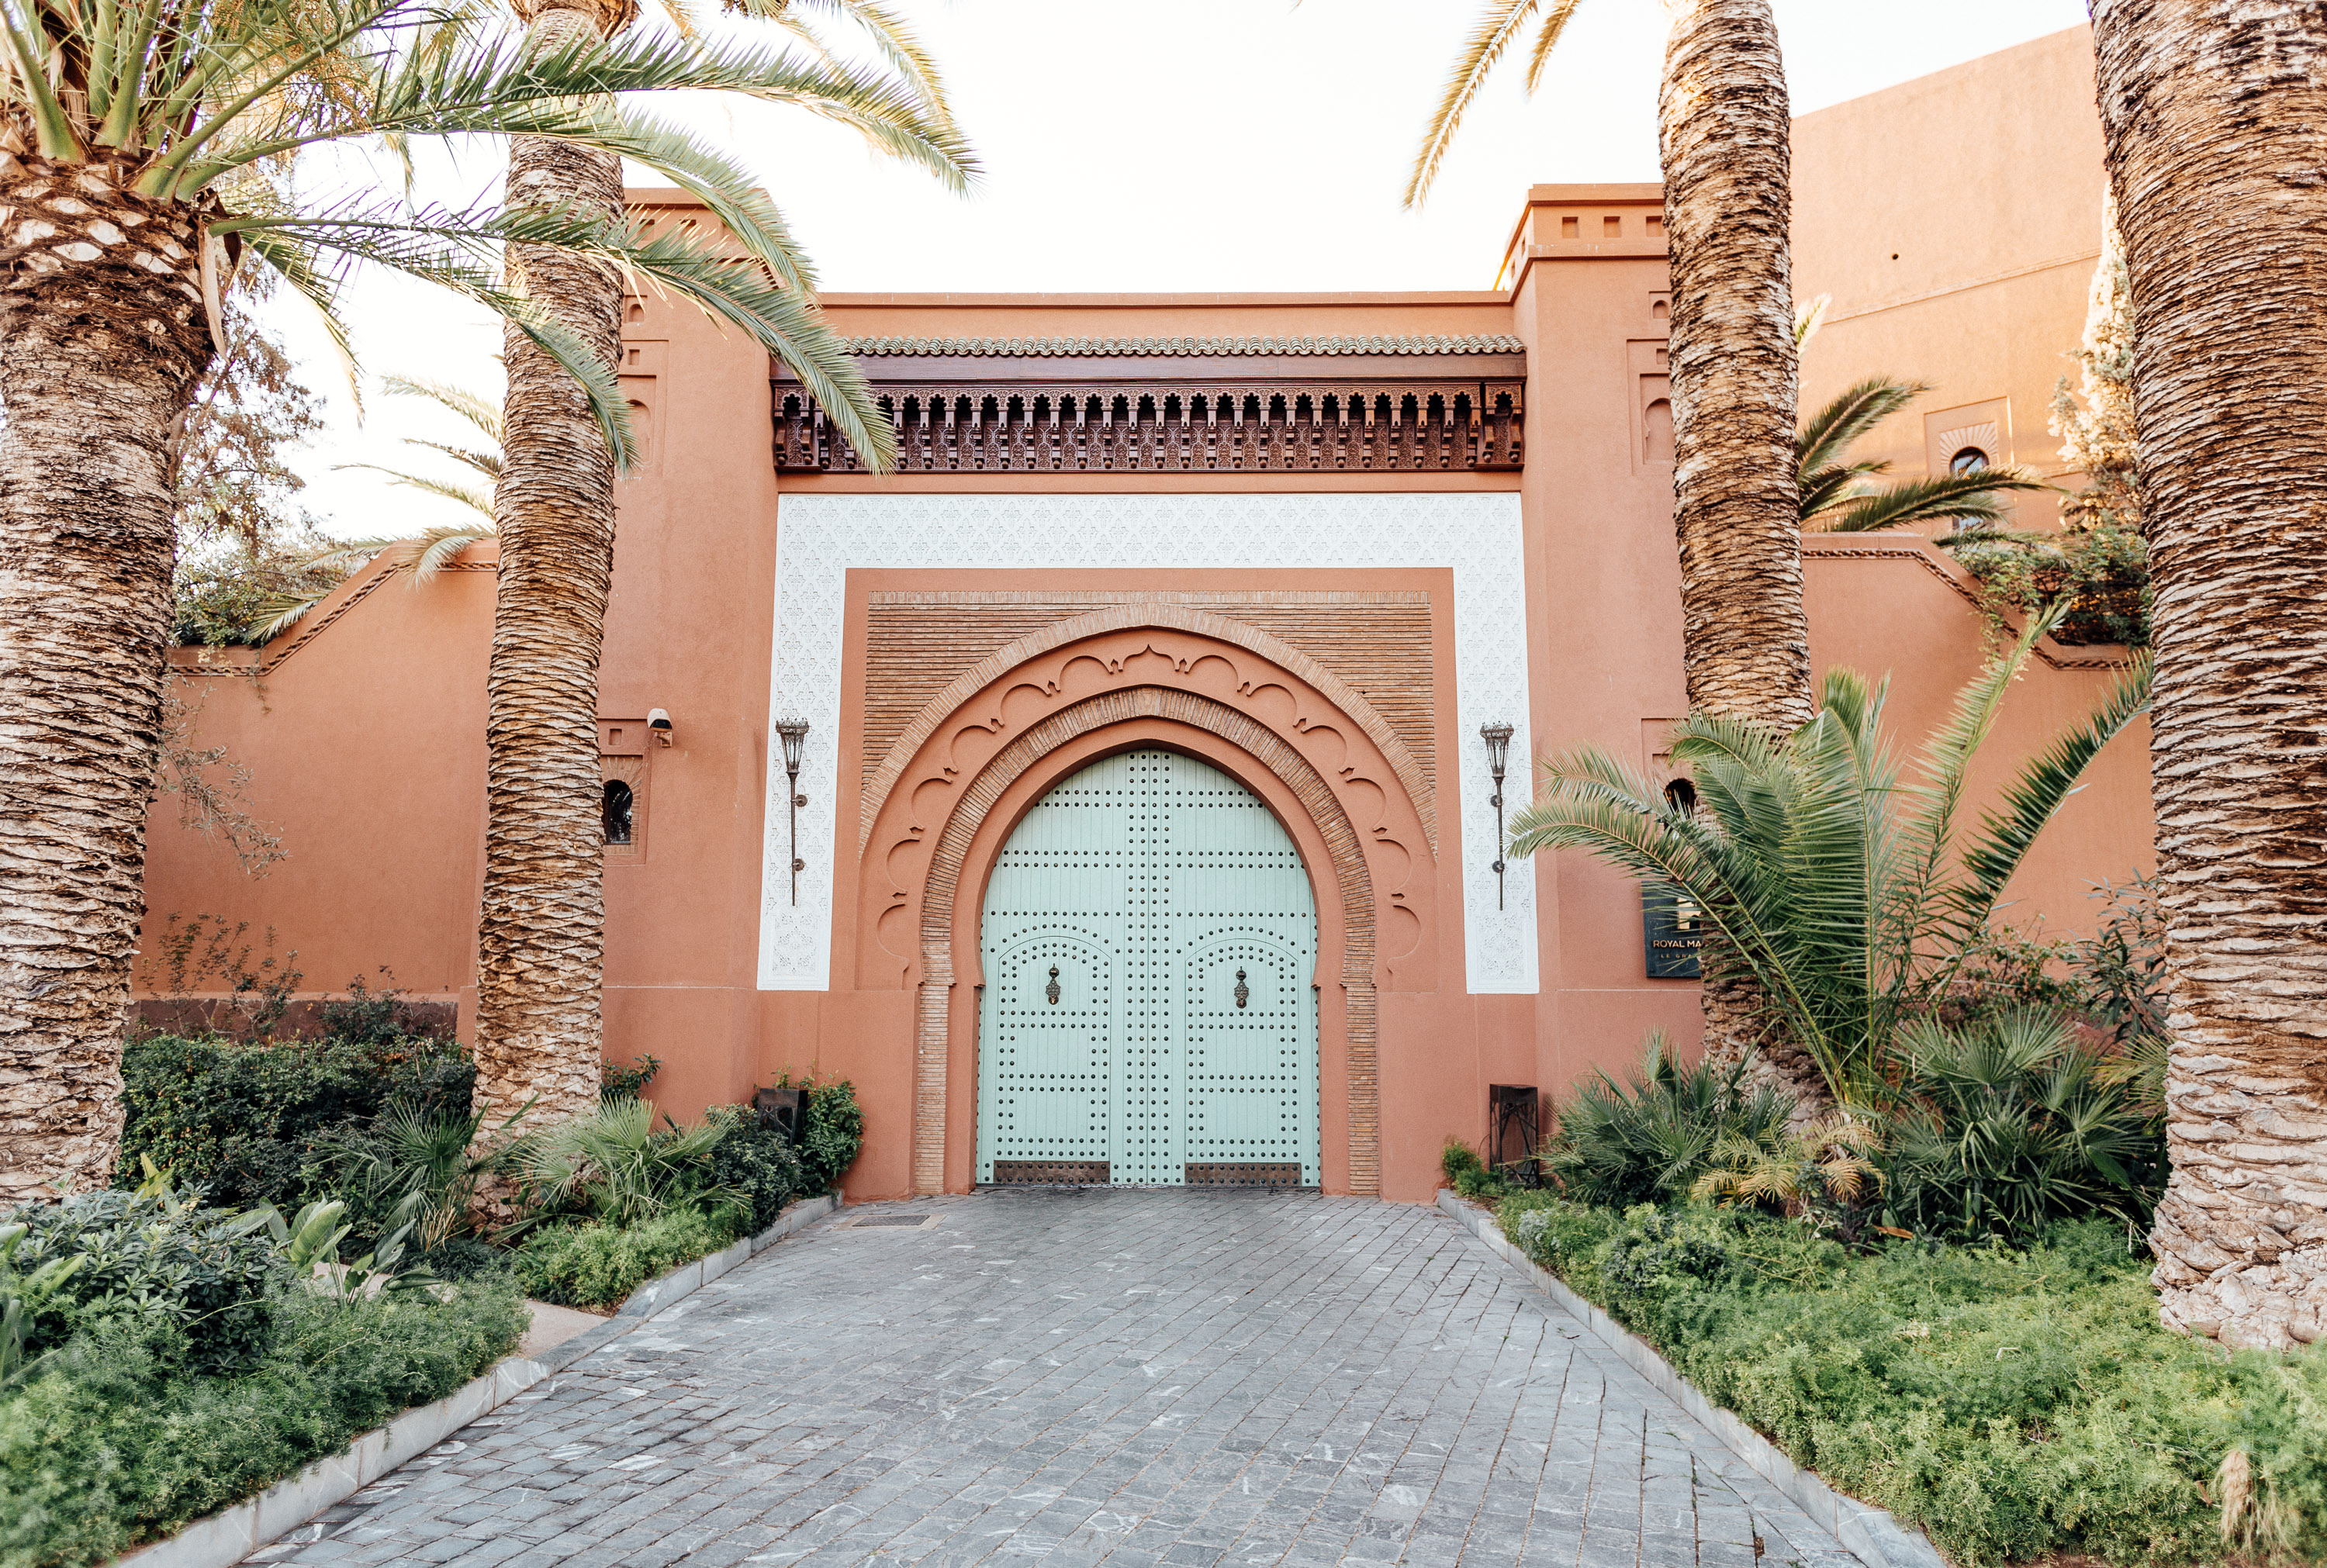 Top Marrakech travel tips